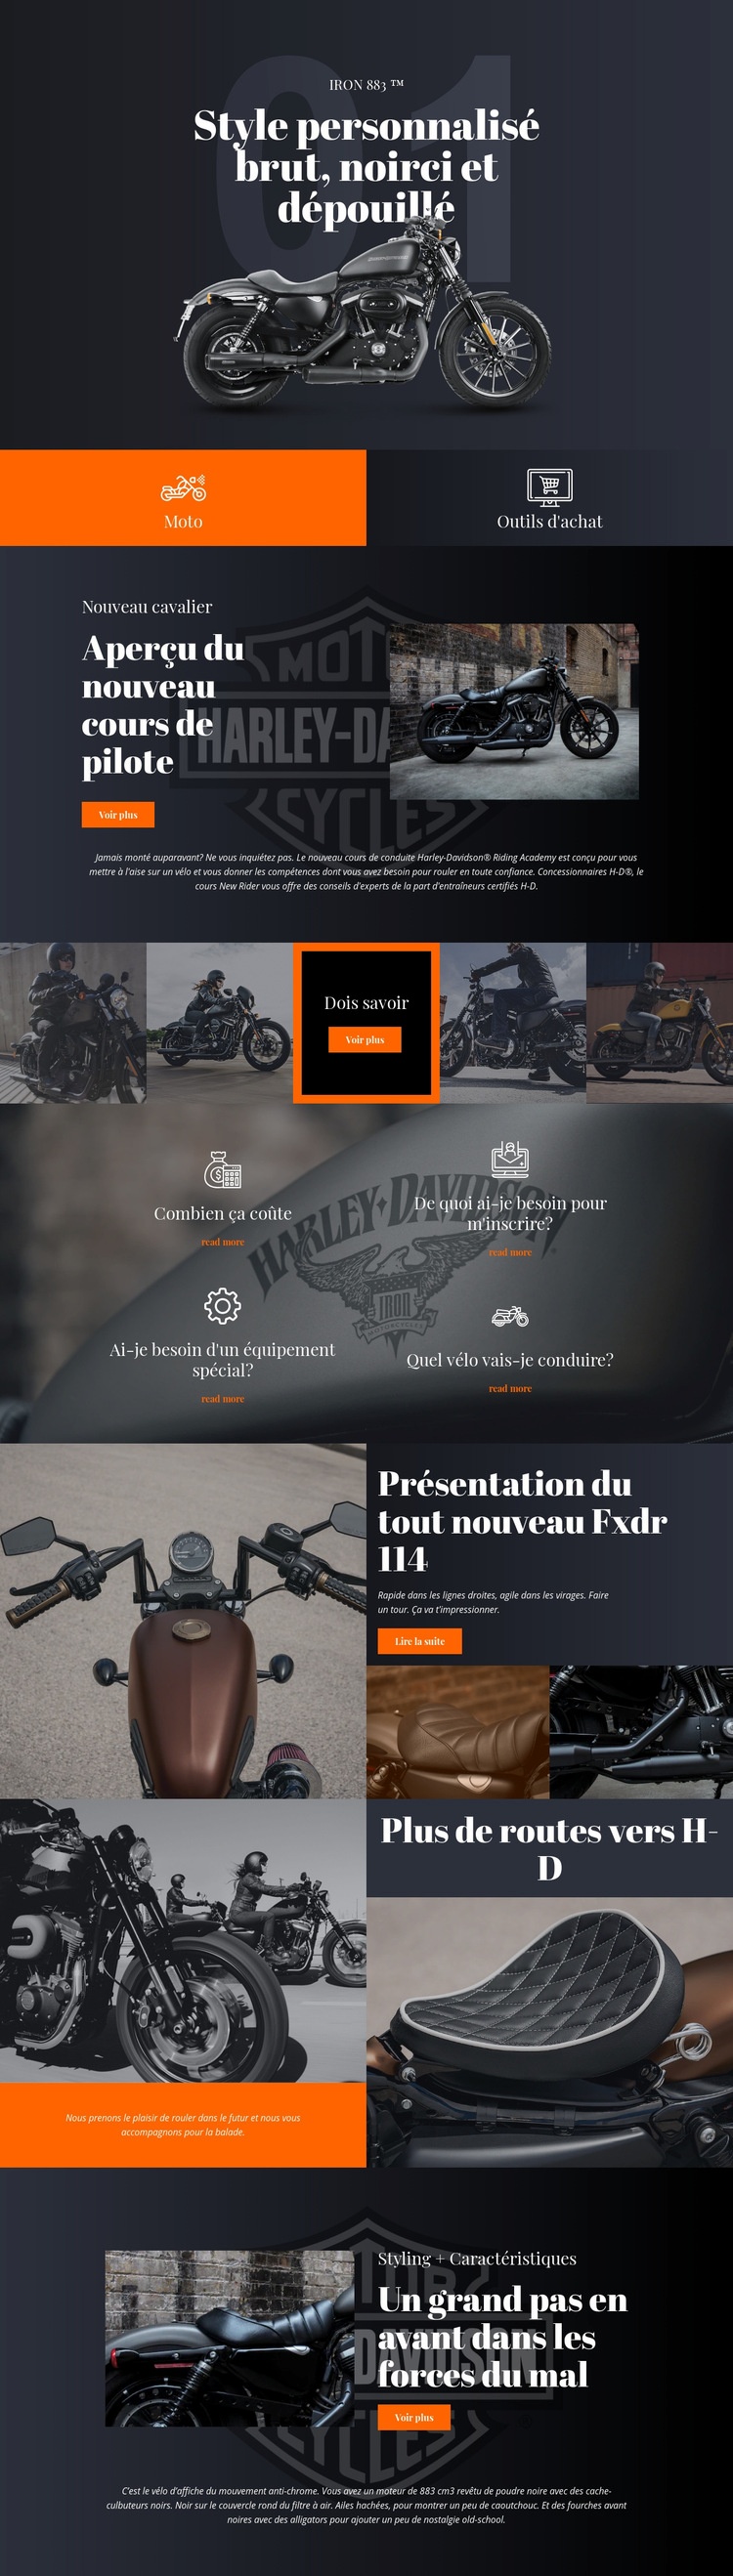 Harley Davidson Page de destination